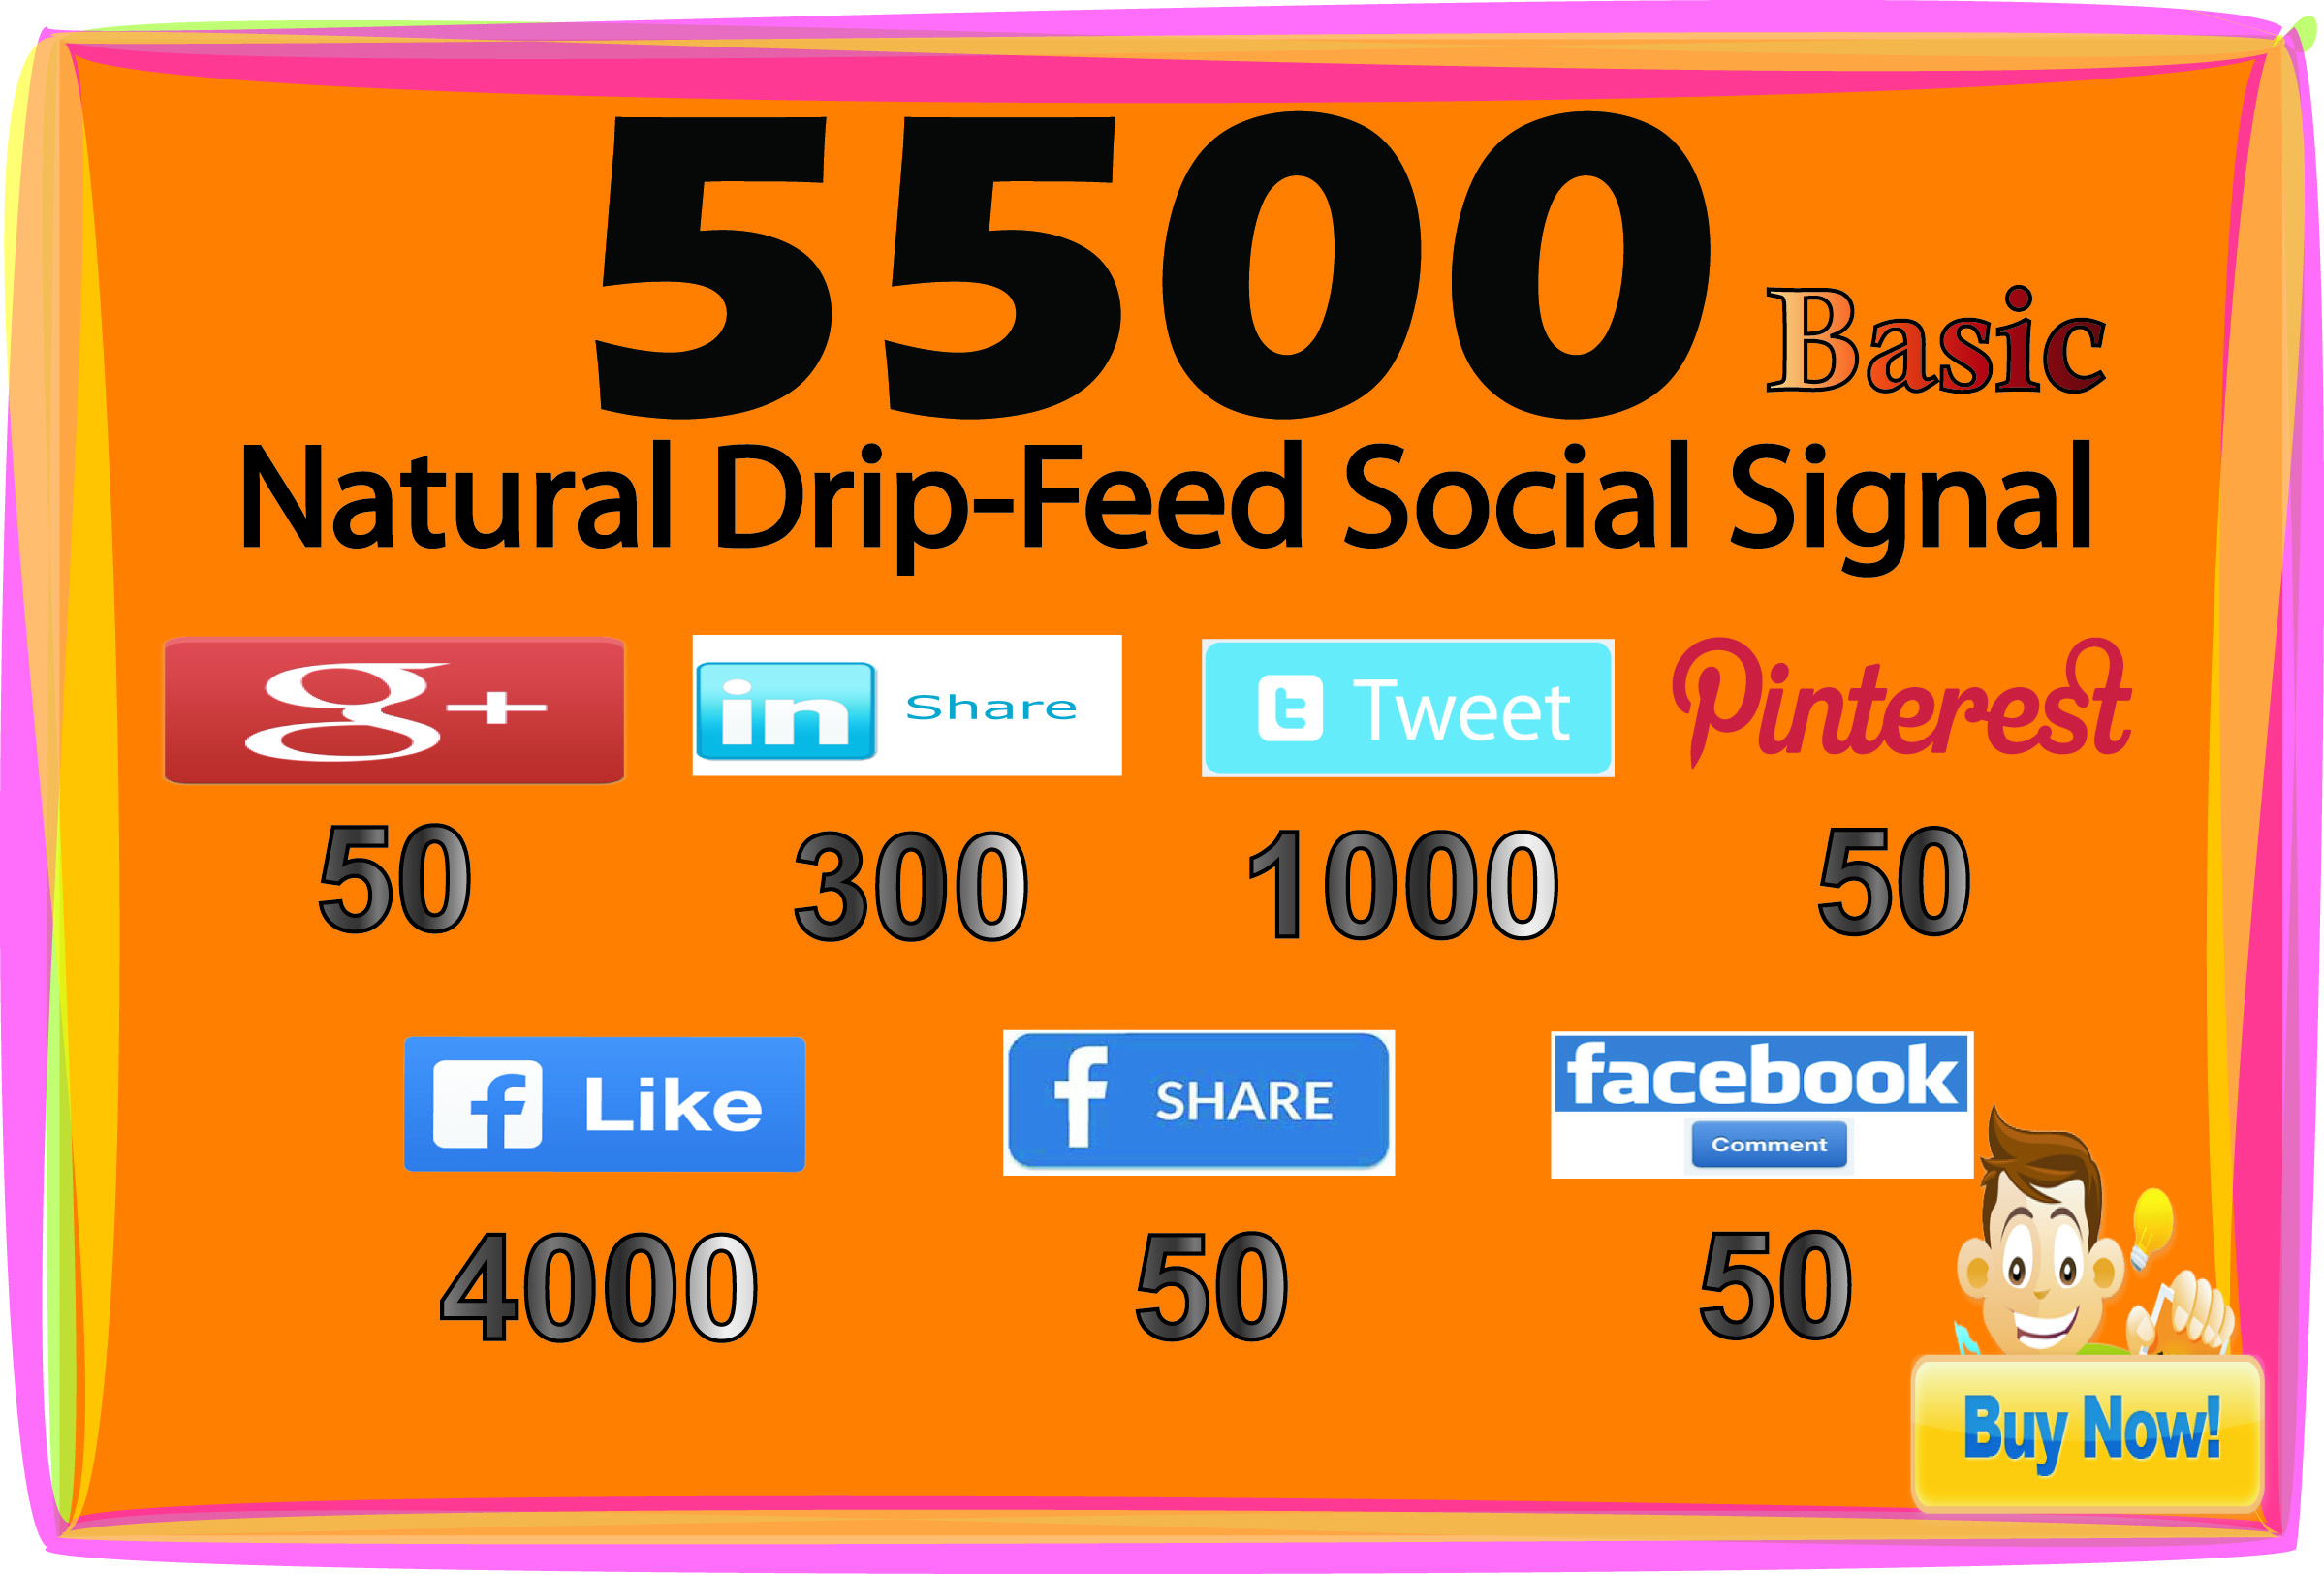 5500 SEO Drip Feed Social Signal from PR-9&PR-10 sites